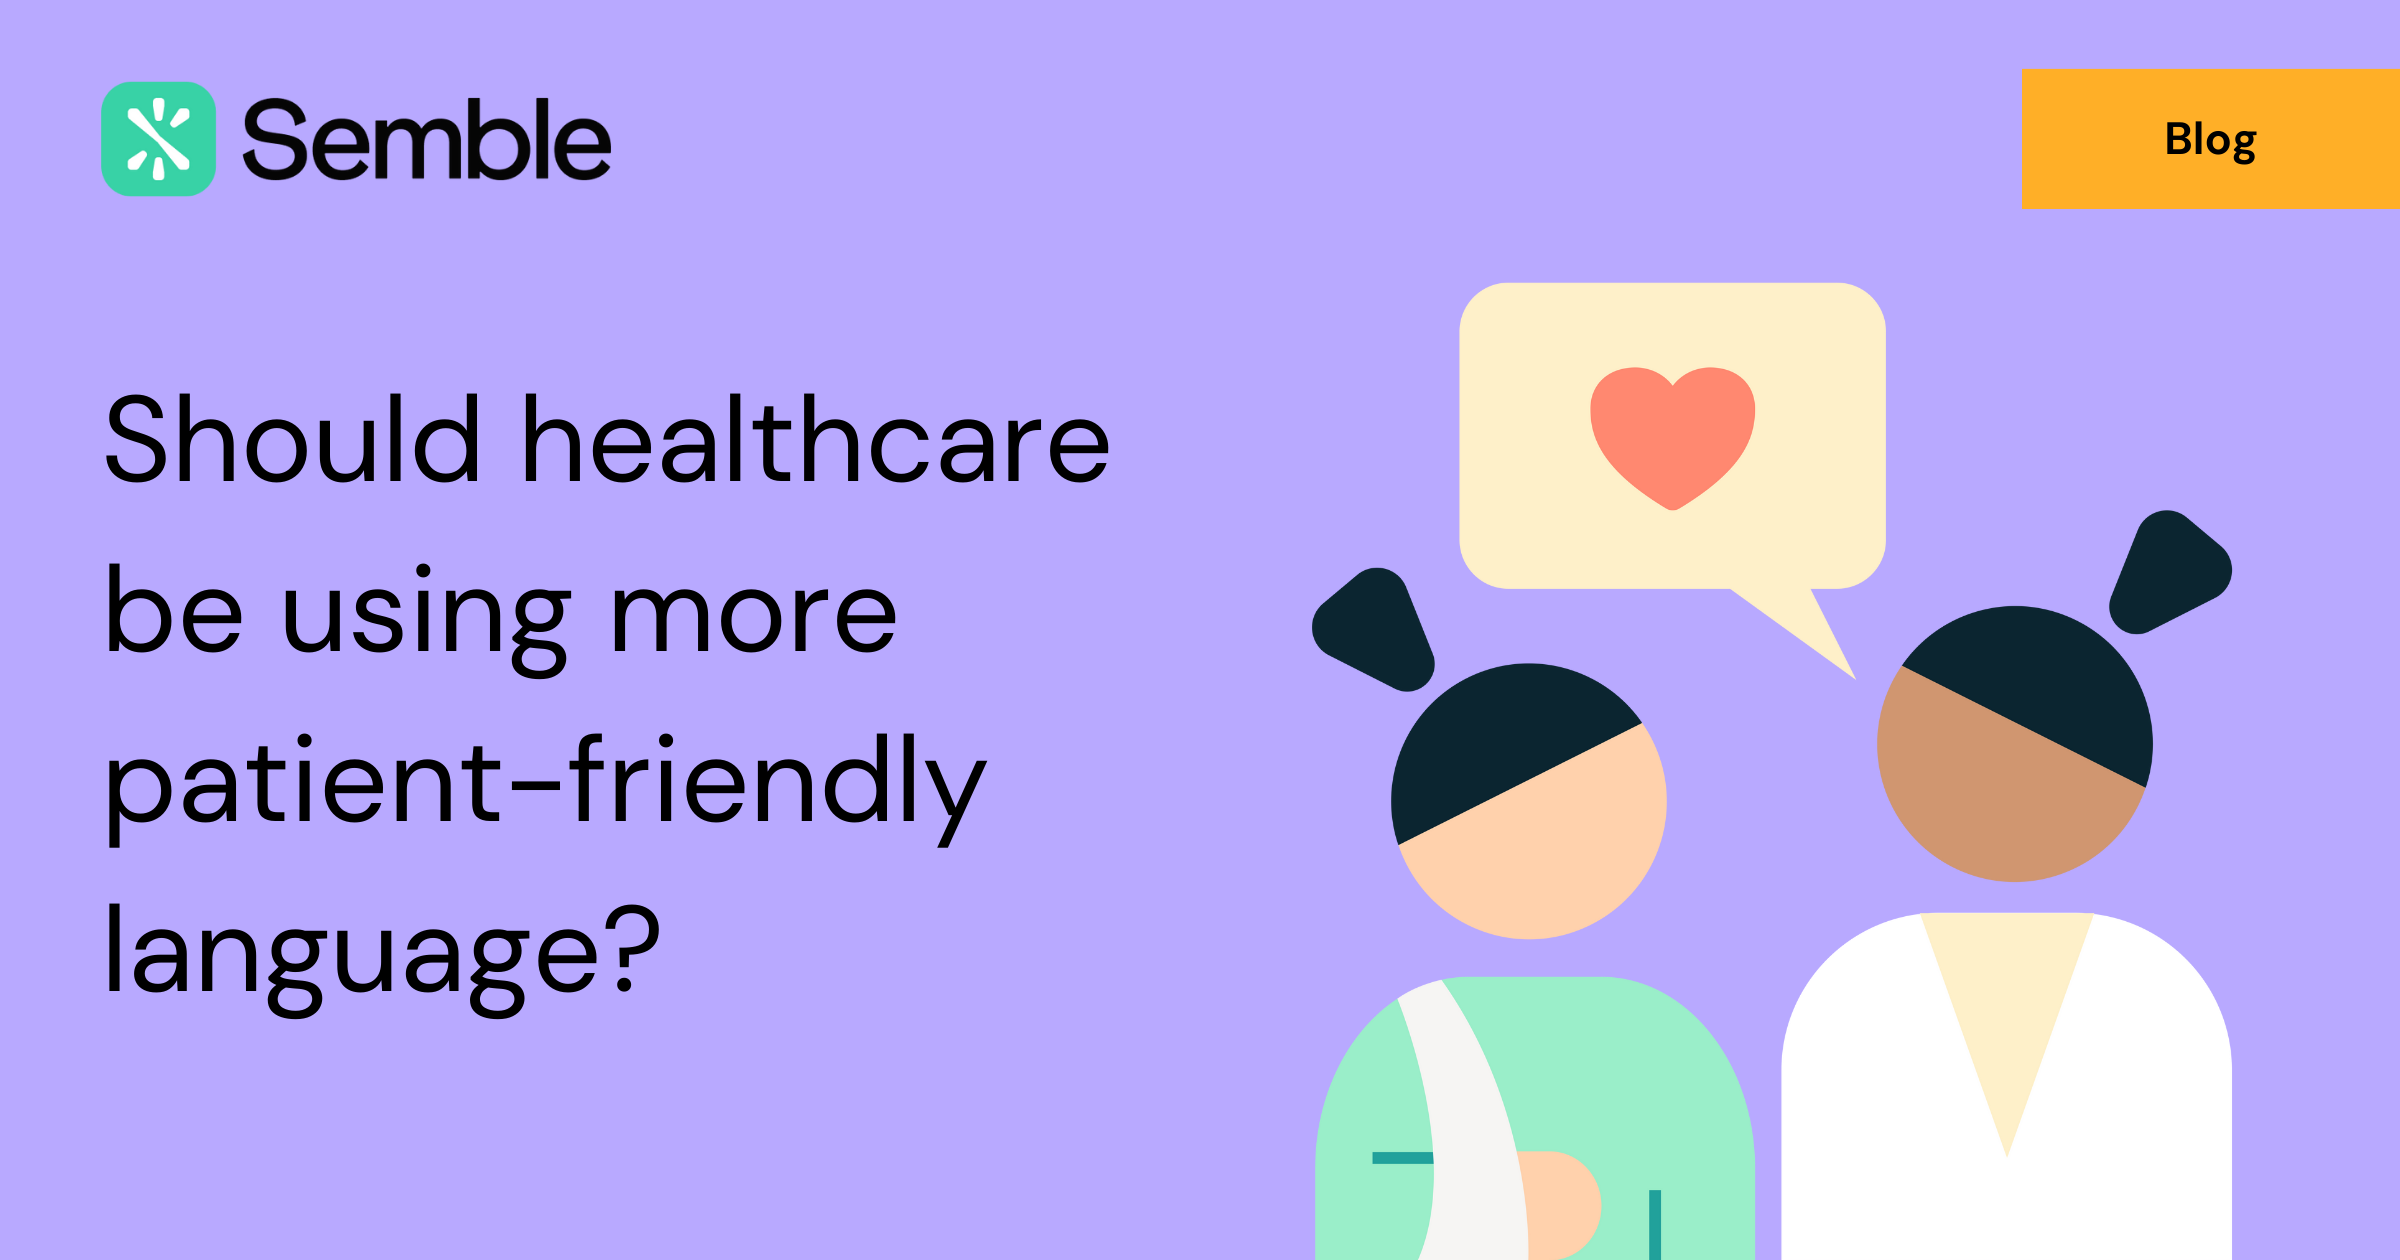 Should healthcare professionals use more patient-friendly language?